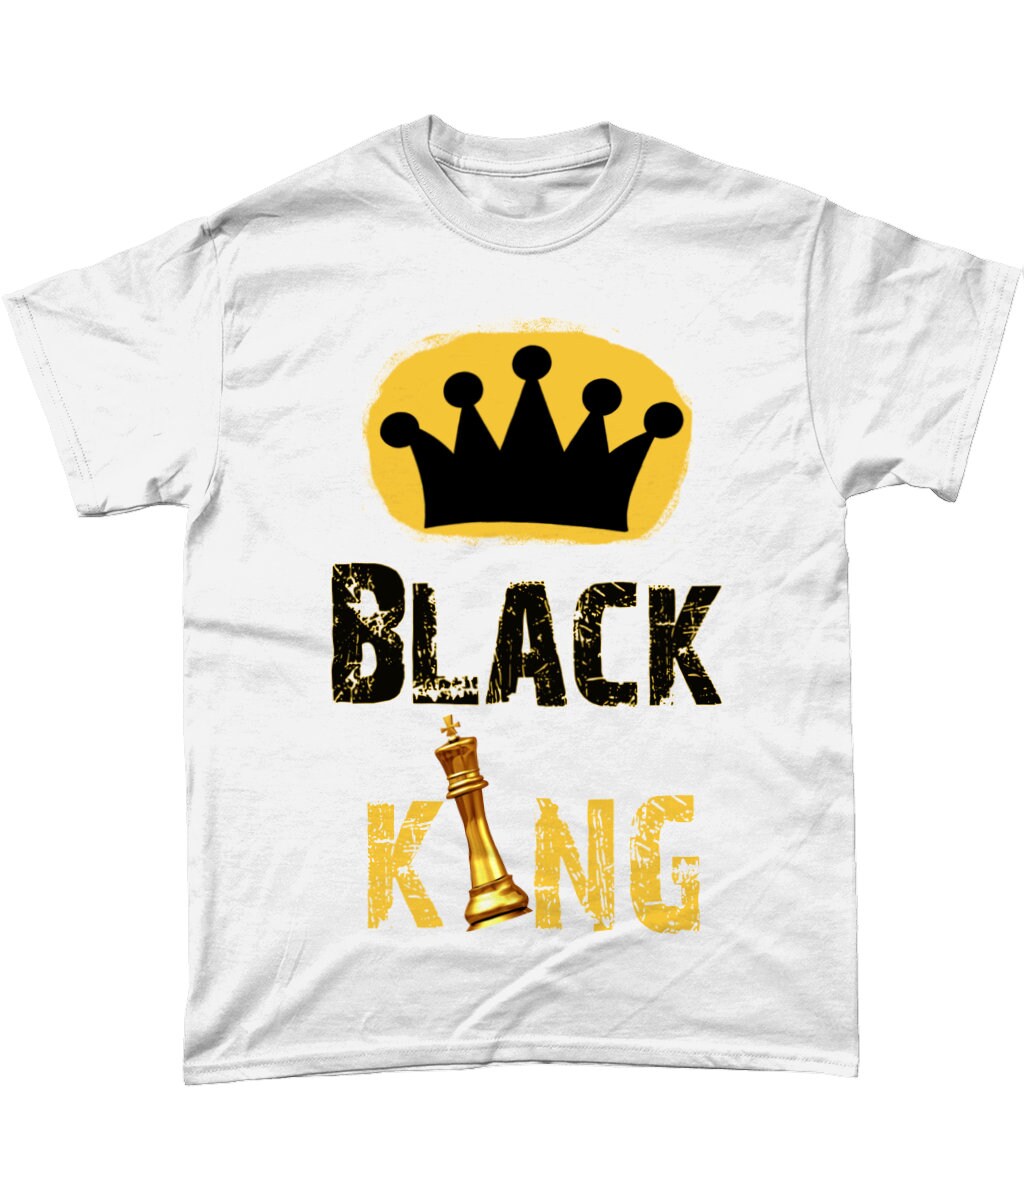 Crowned Black King T-shirt, Black Excellence T-shirt, Black Pride Tee ...